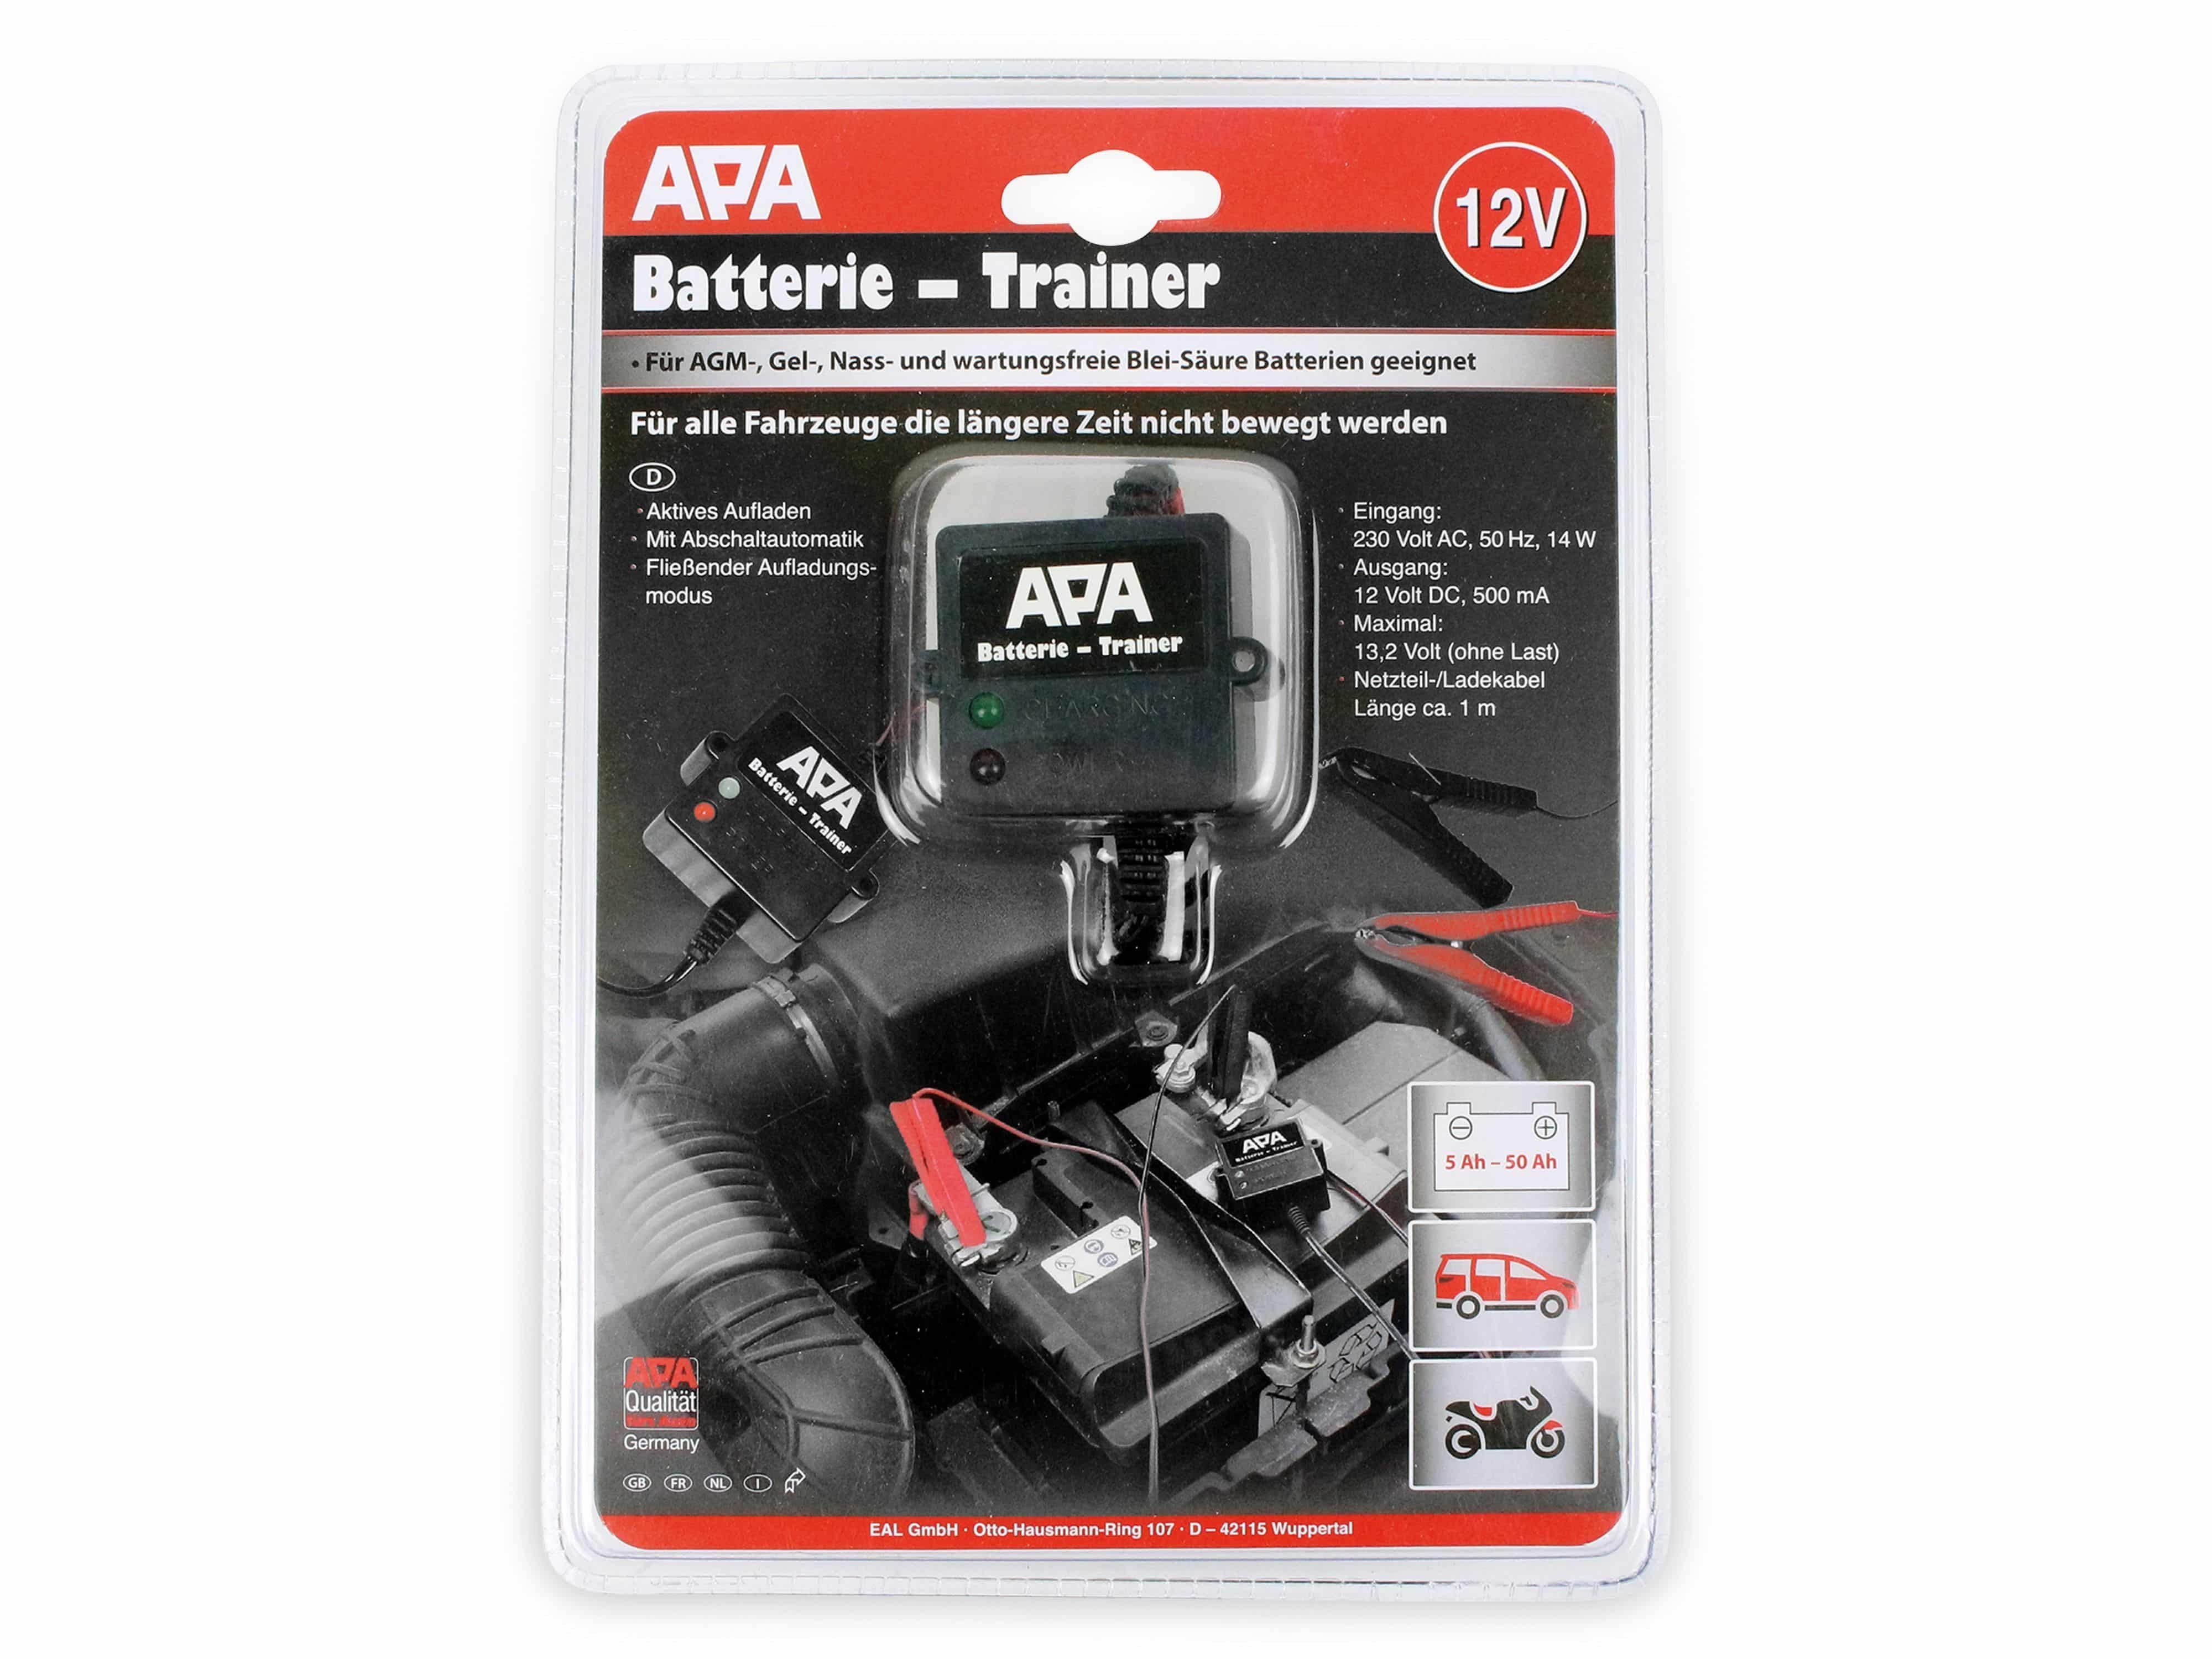 Batterie 500mA APA Batterietrainer 16506, 12V, APA